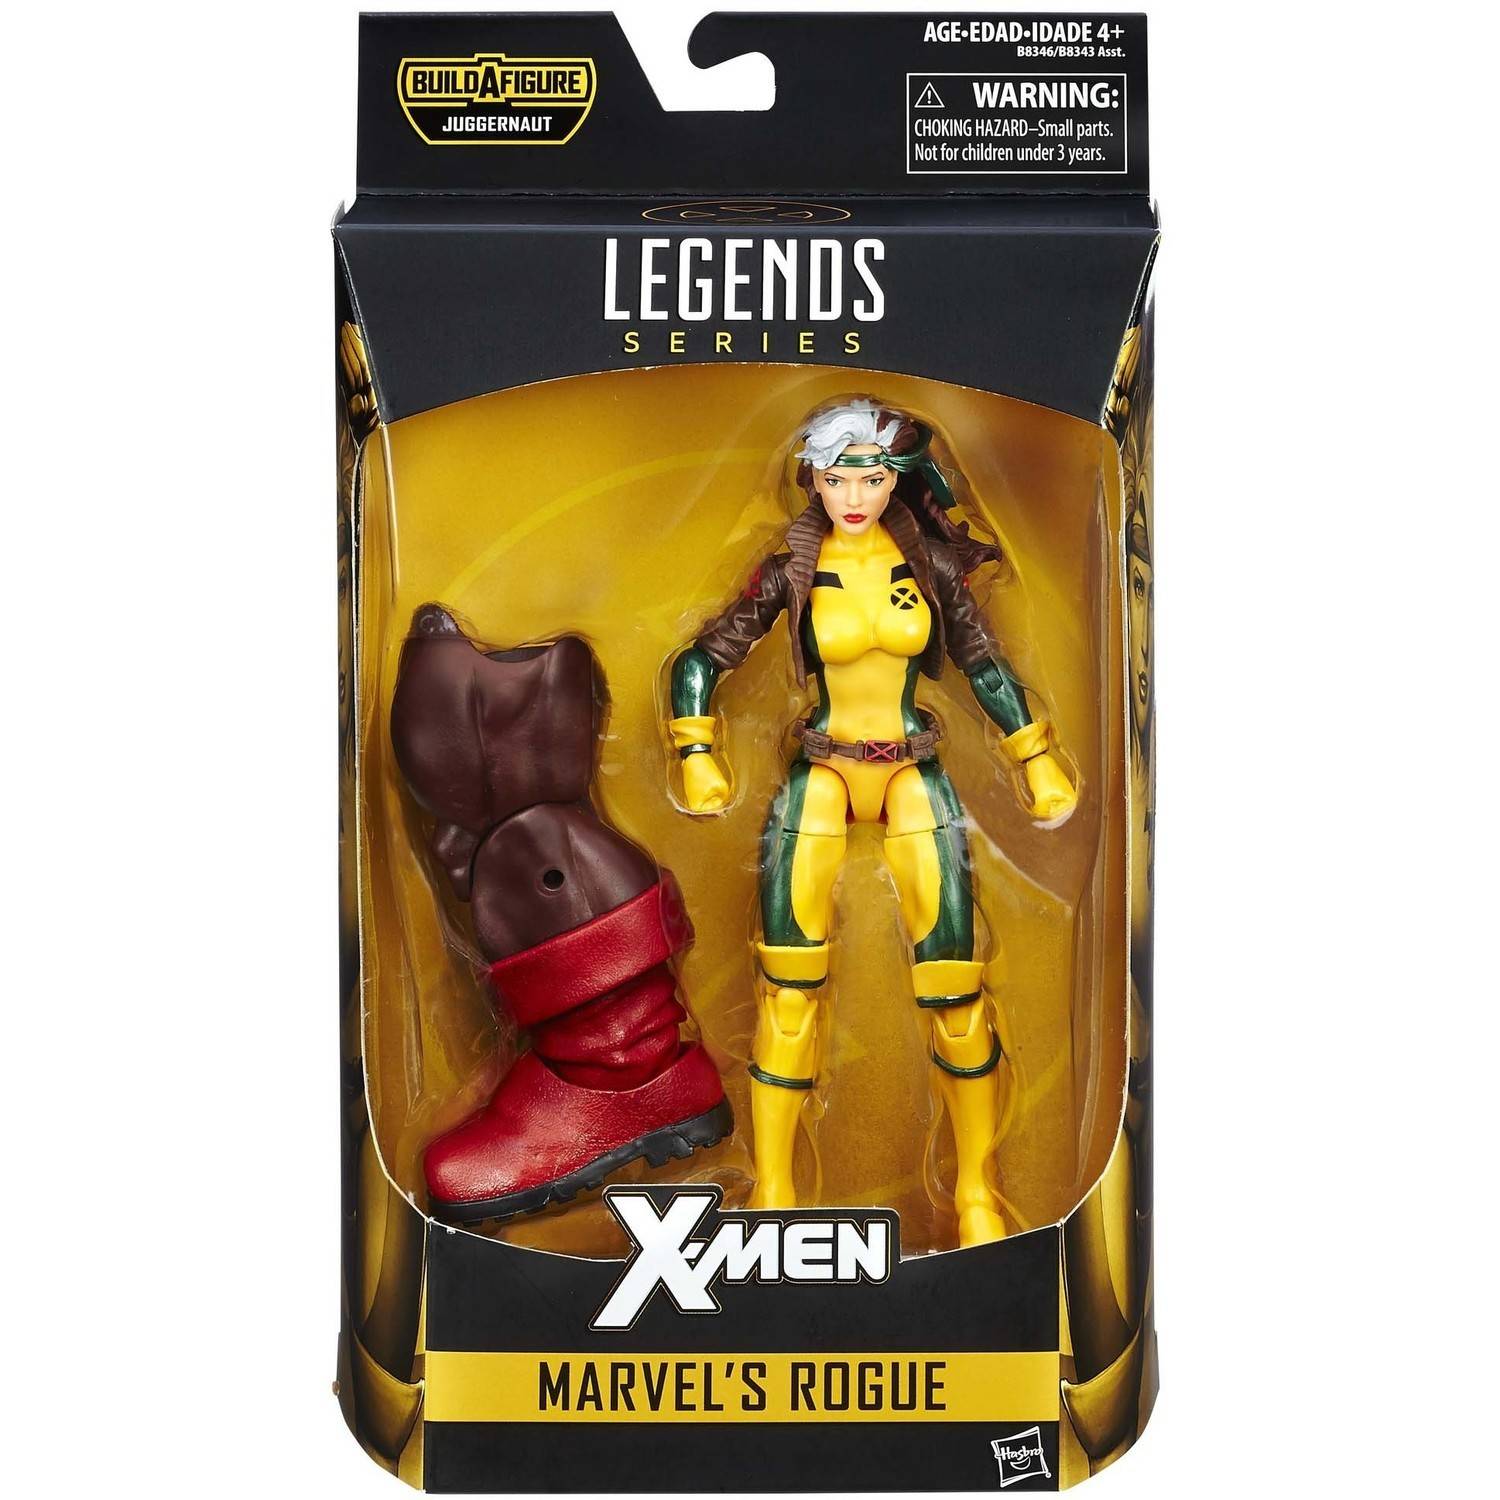 Marvel Legends Series X-Men Rogue with Juggernaut BAF Piece 2016 Hasbro B8346 - image 2 of 2